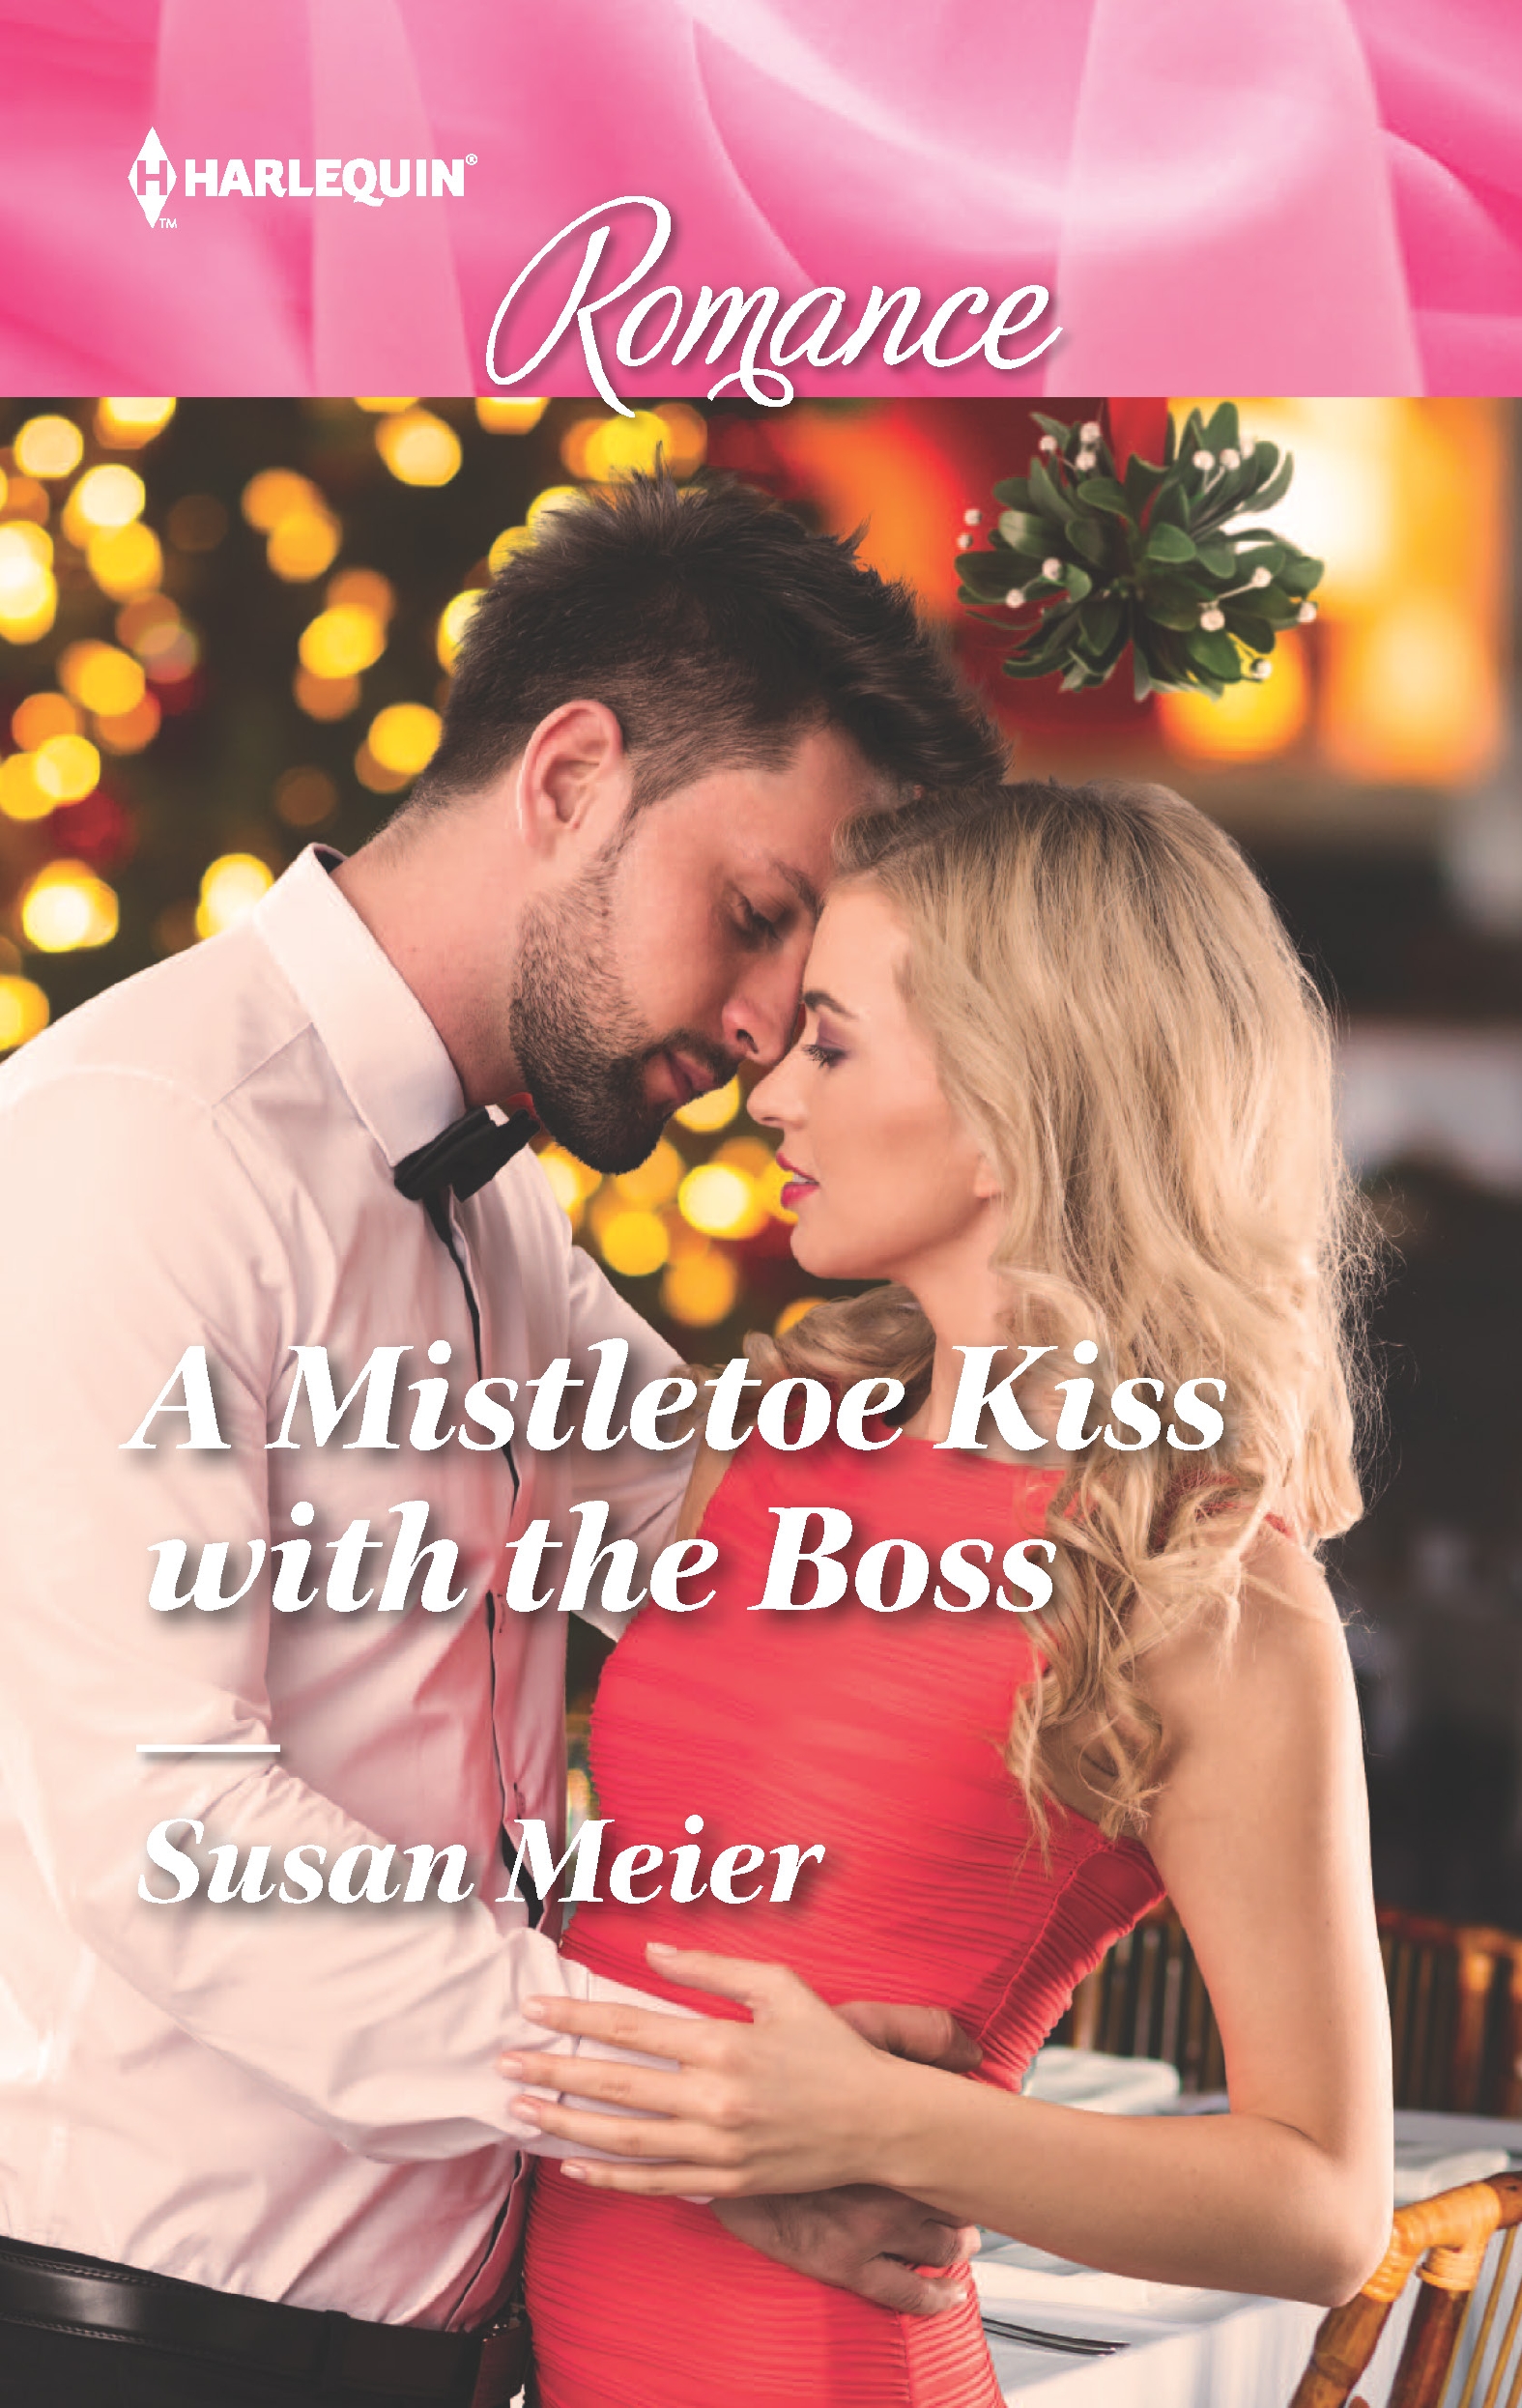 A Mistletoe Kiss with the Boss (2016)